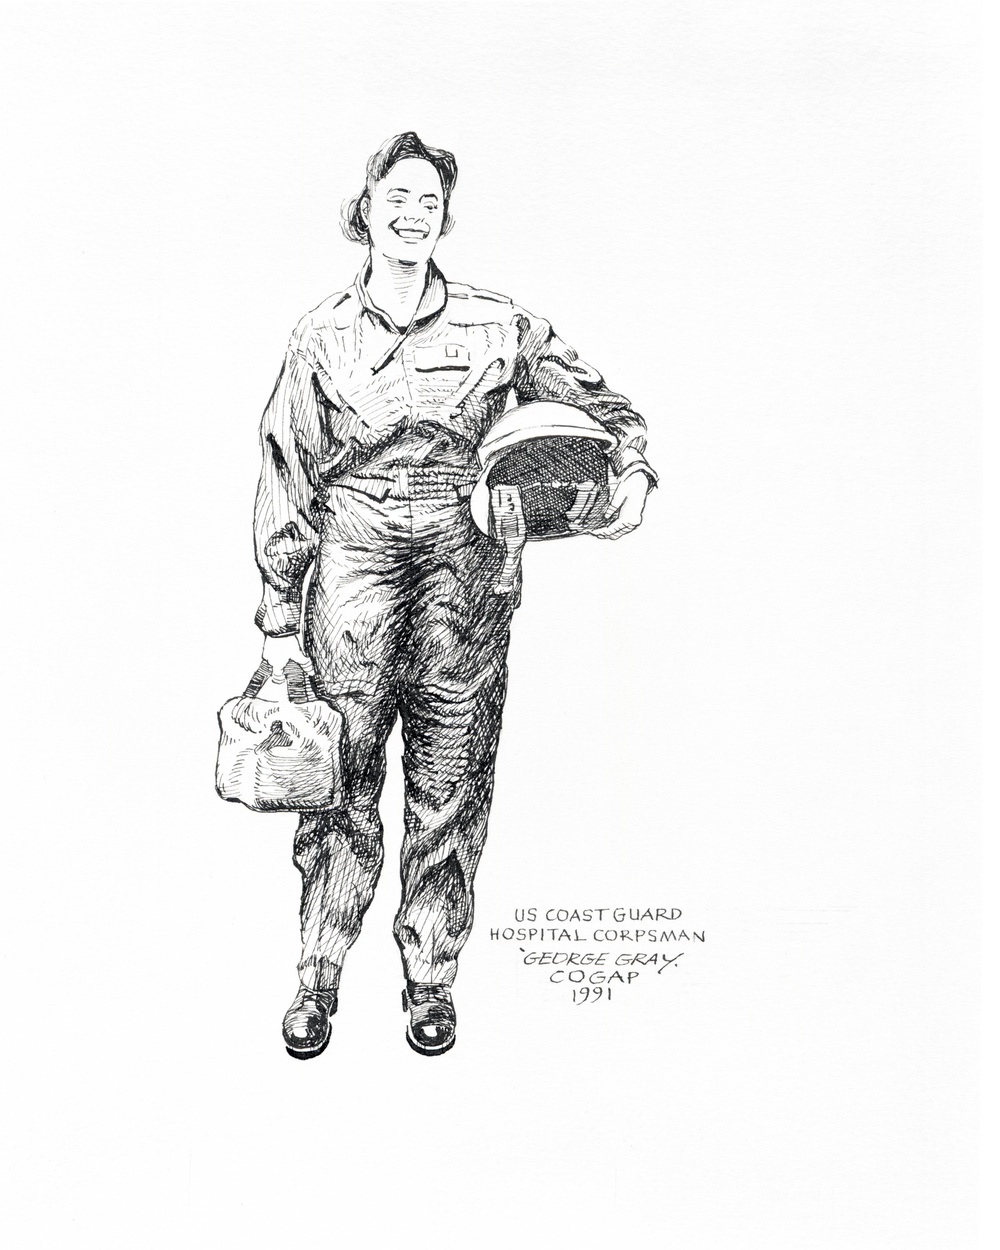 USCG Hospital Corpsman by George Gray